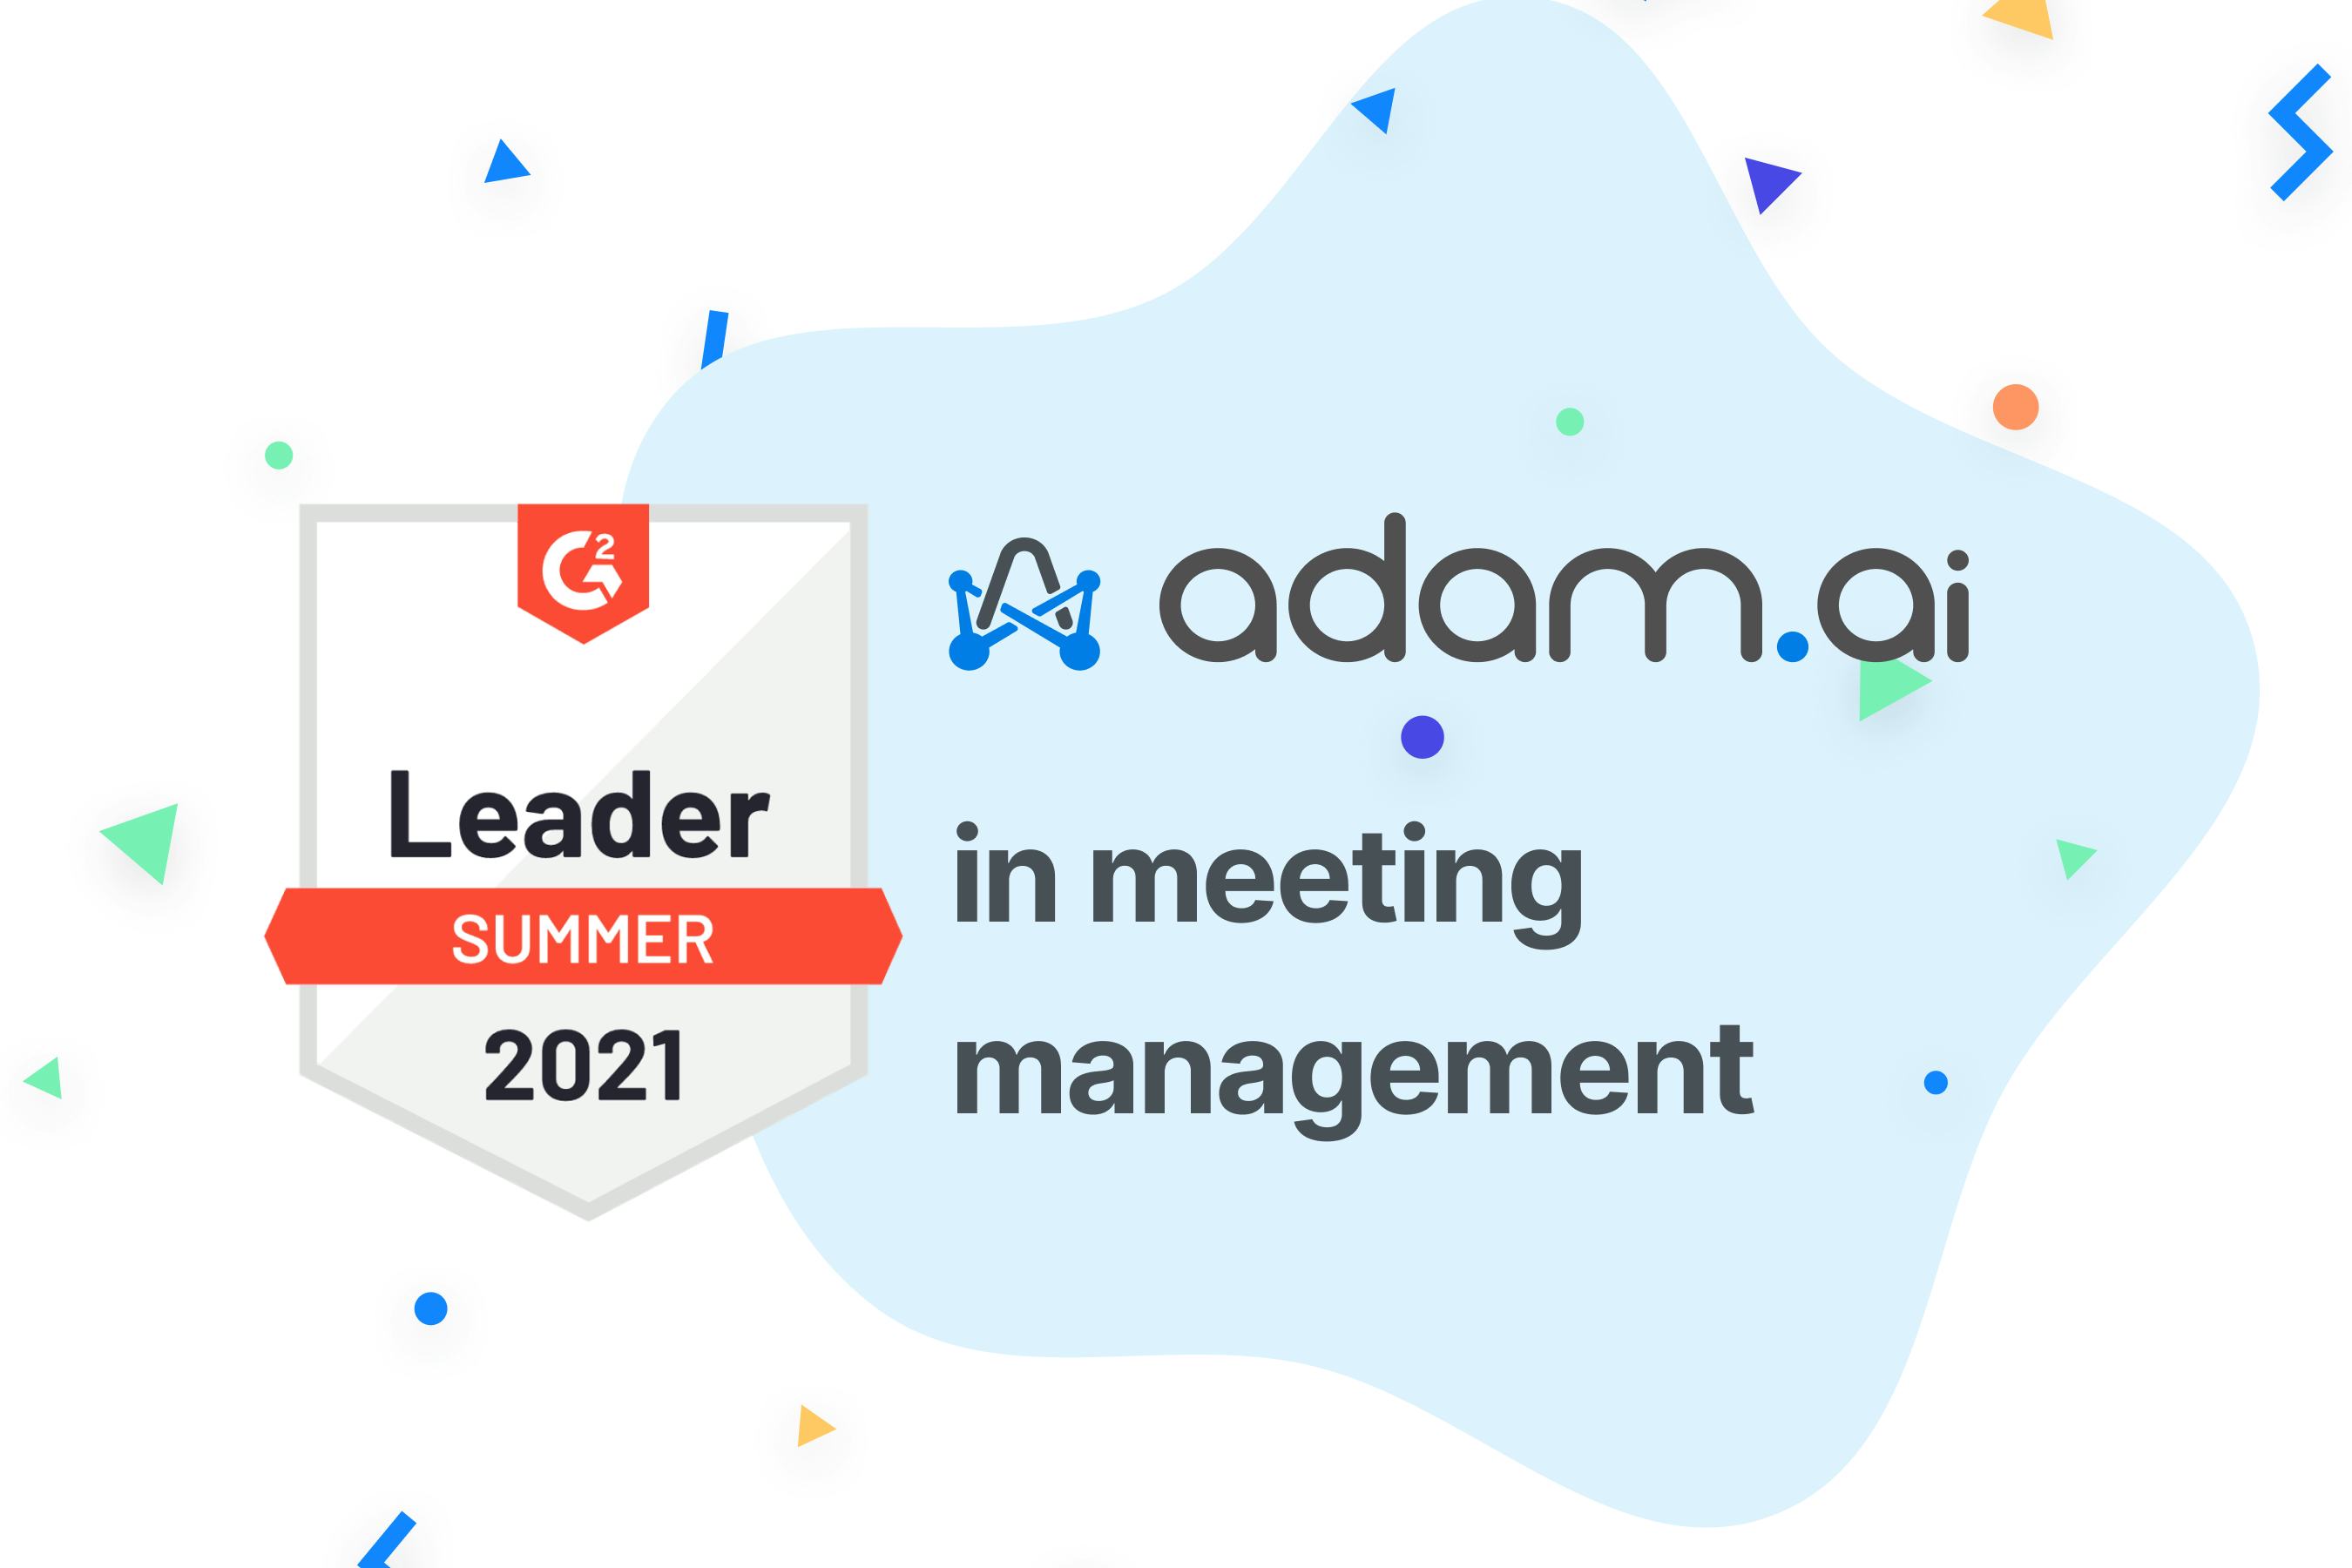 adam.ai Ranked a Leader (Summer 2021) by G2